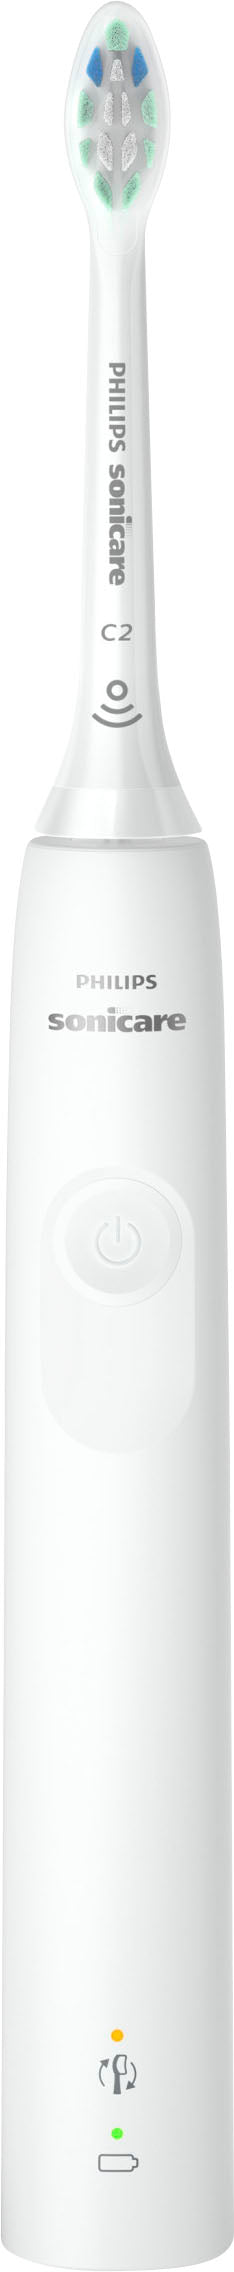 Philips Sonicare 4100 Power Toothbrush - White_10